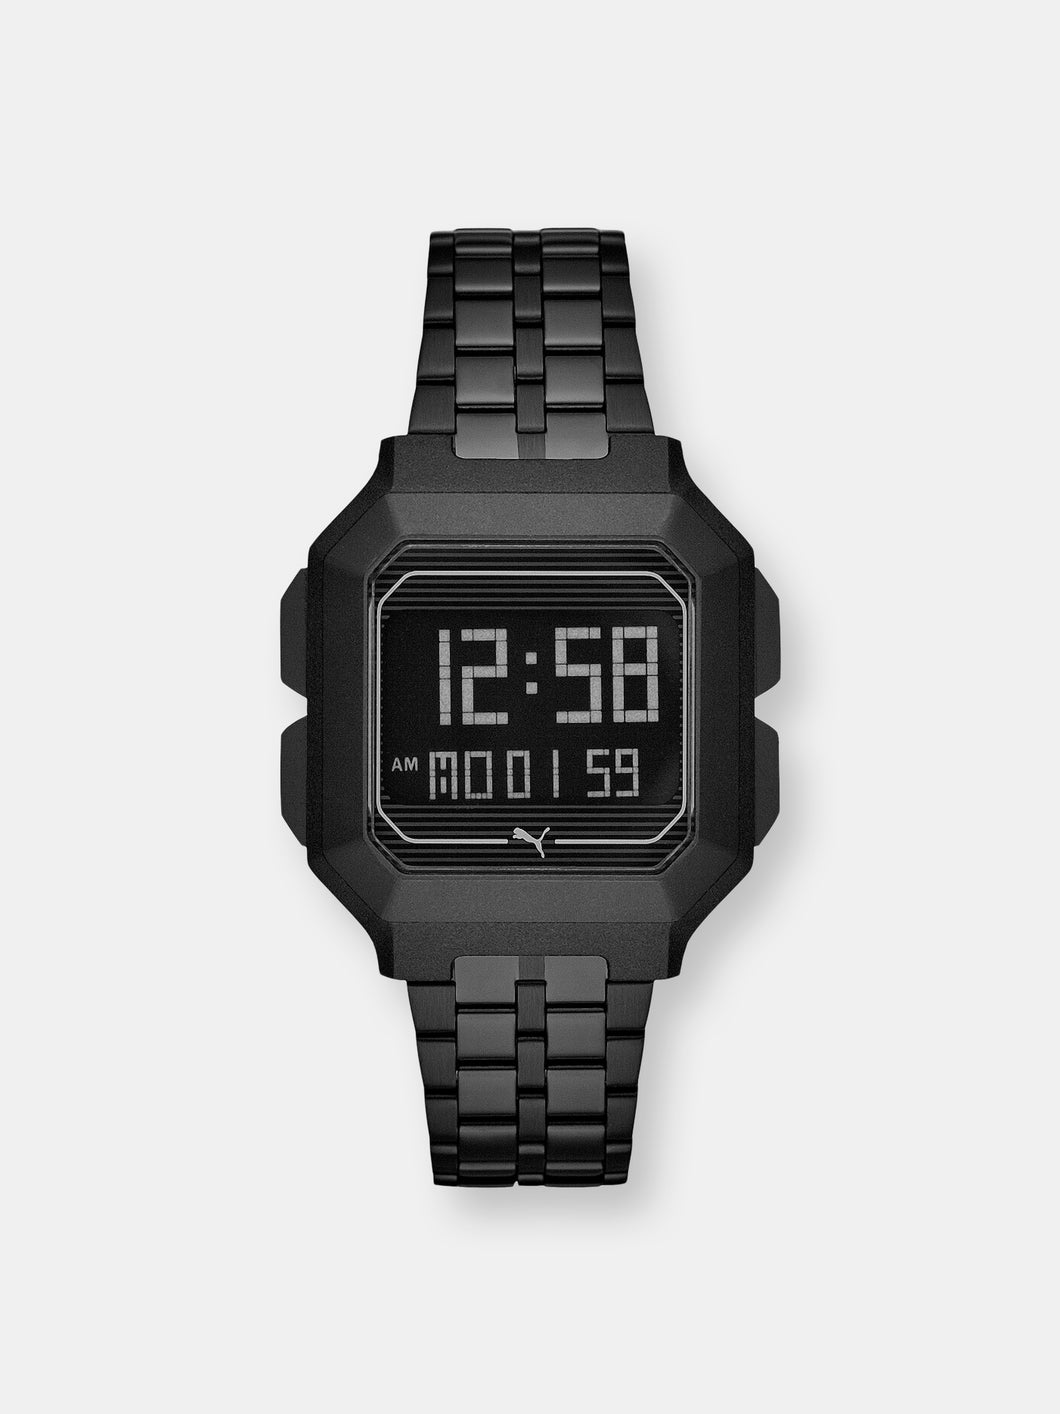 Puma Men's Remix P5017 Black Plastic Quartz Fashion Watch